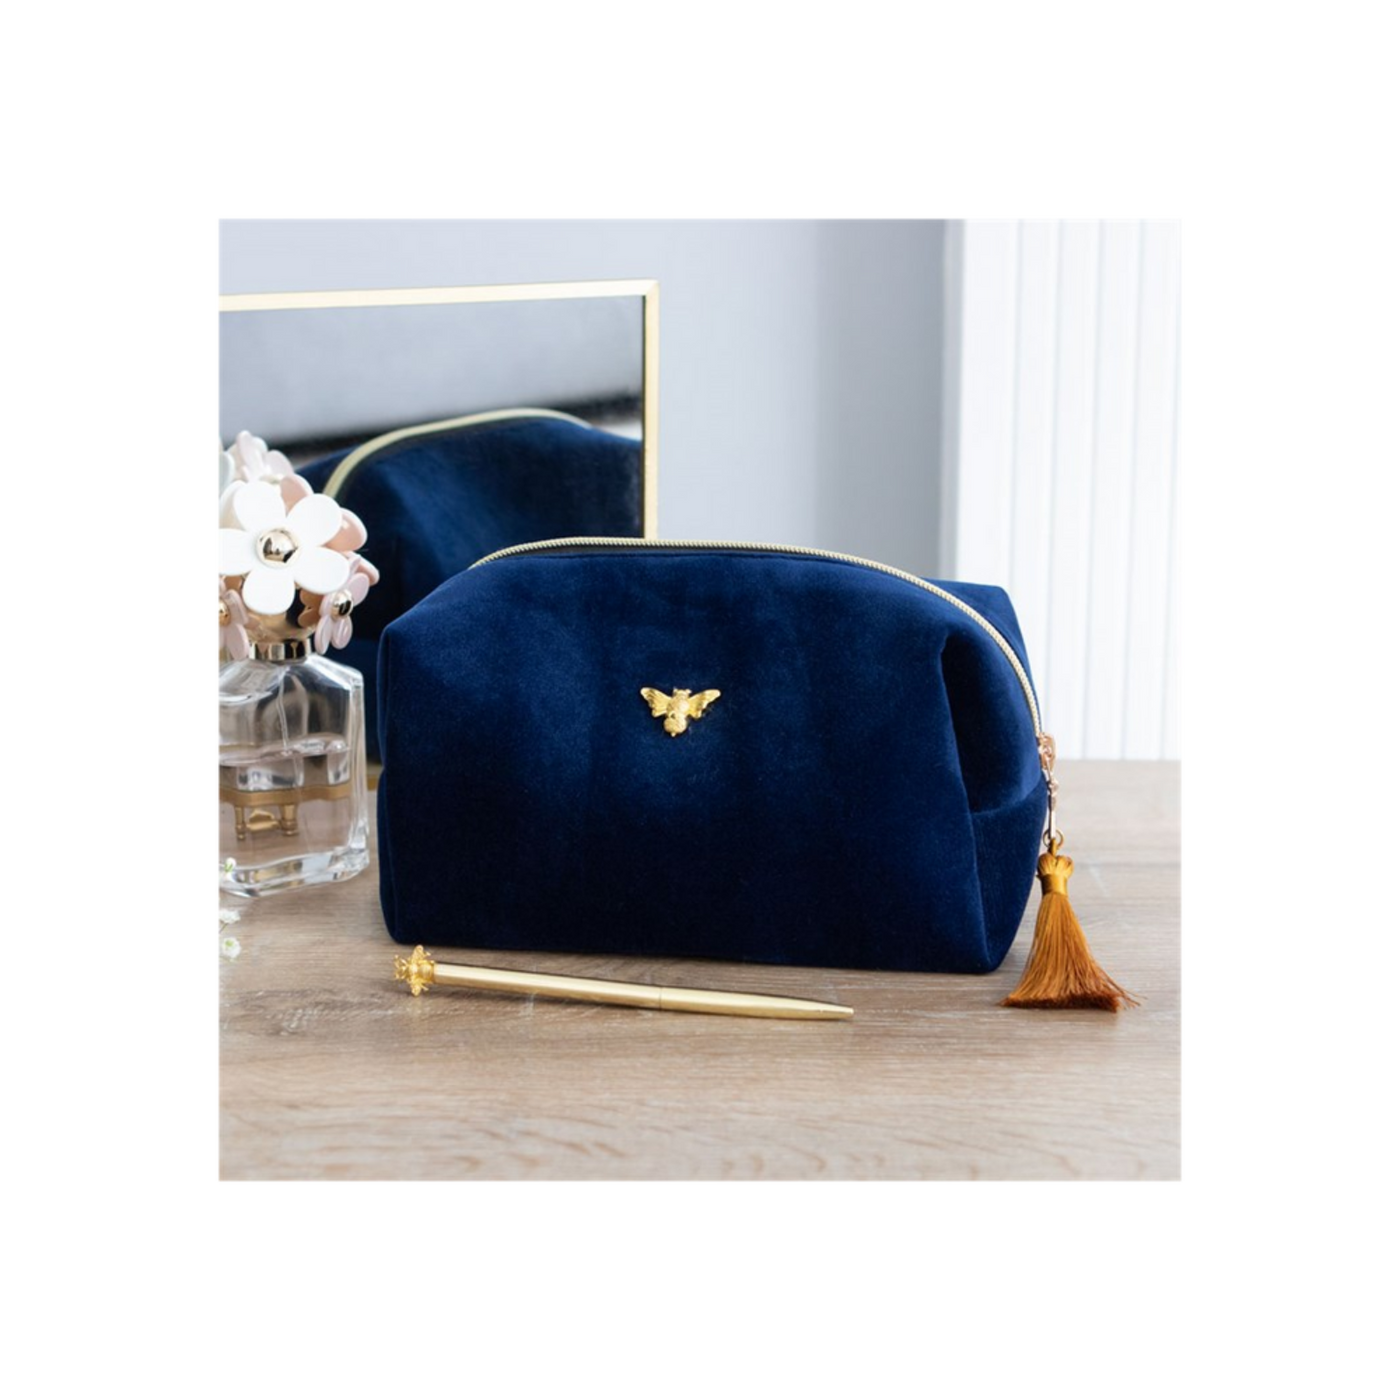 Velvet Makeup Bag With Gold Bee Design And Tassel.